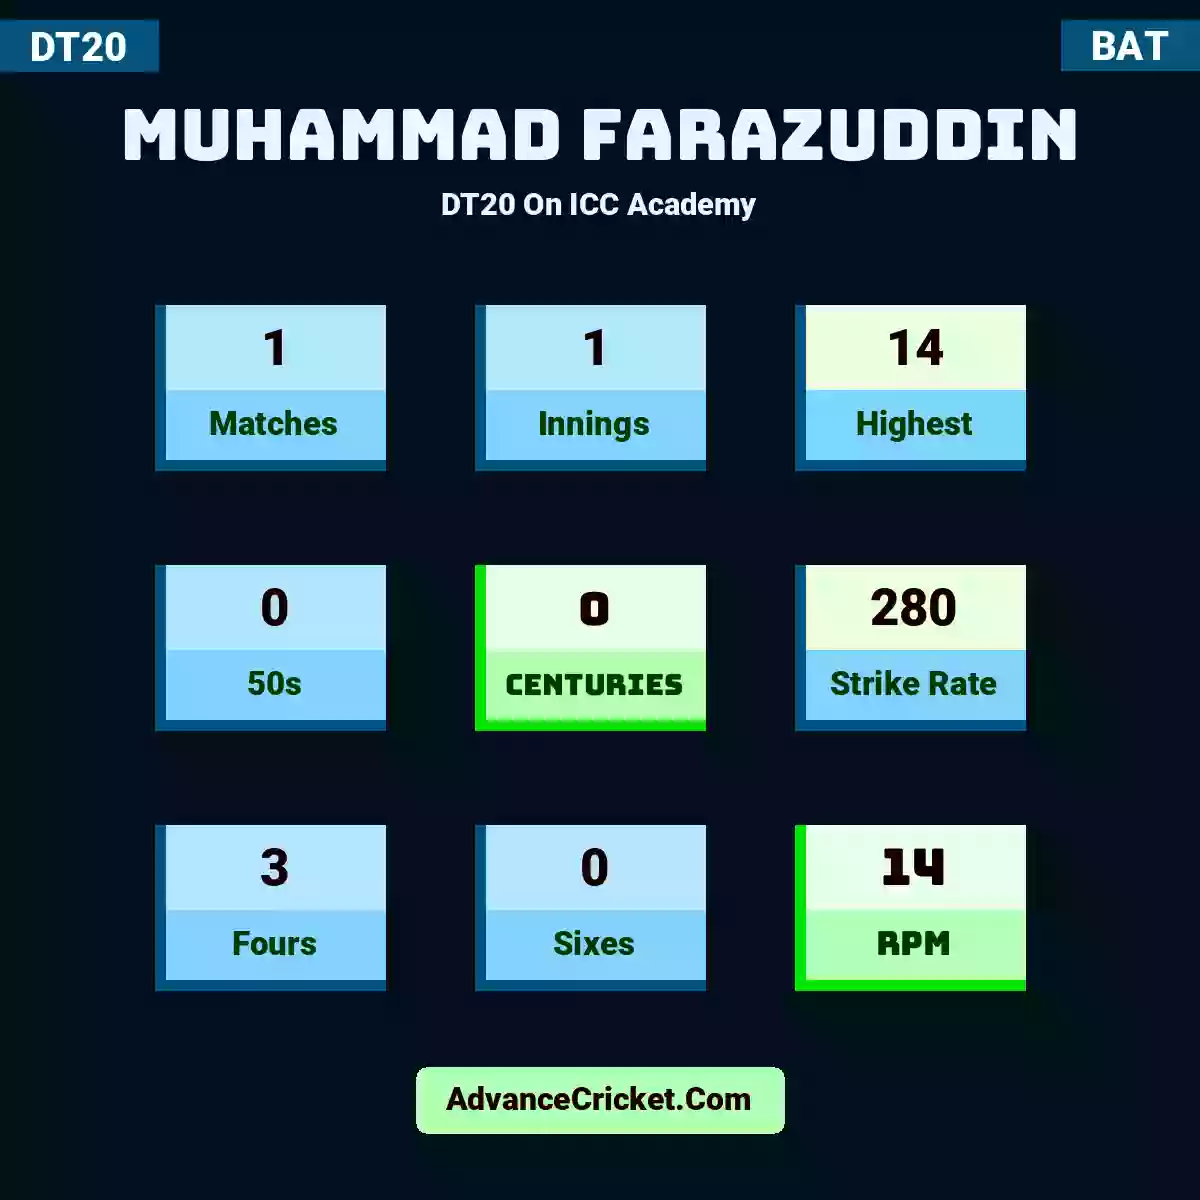 Muhammad Farazuddin DT20  On ICC Academy, Muhammad Farazuddin played 1 matches, scored 14 runs as highest, 0 half-centuries, and 0 centuries, with a strike rate of 280. M.Farazuddin hit 3 fours and 0 sixes, with an RPM of 14.